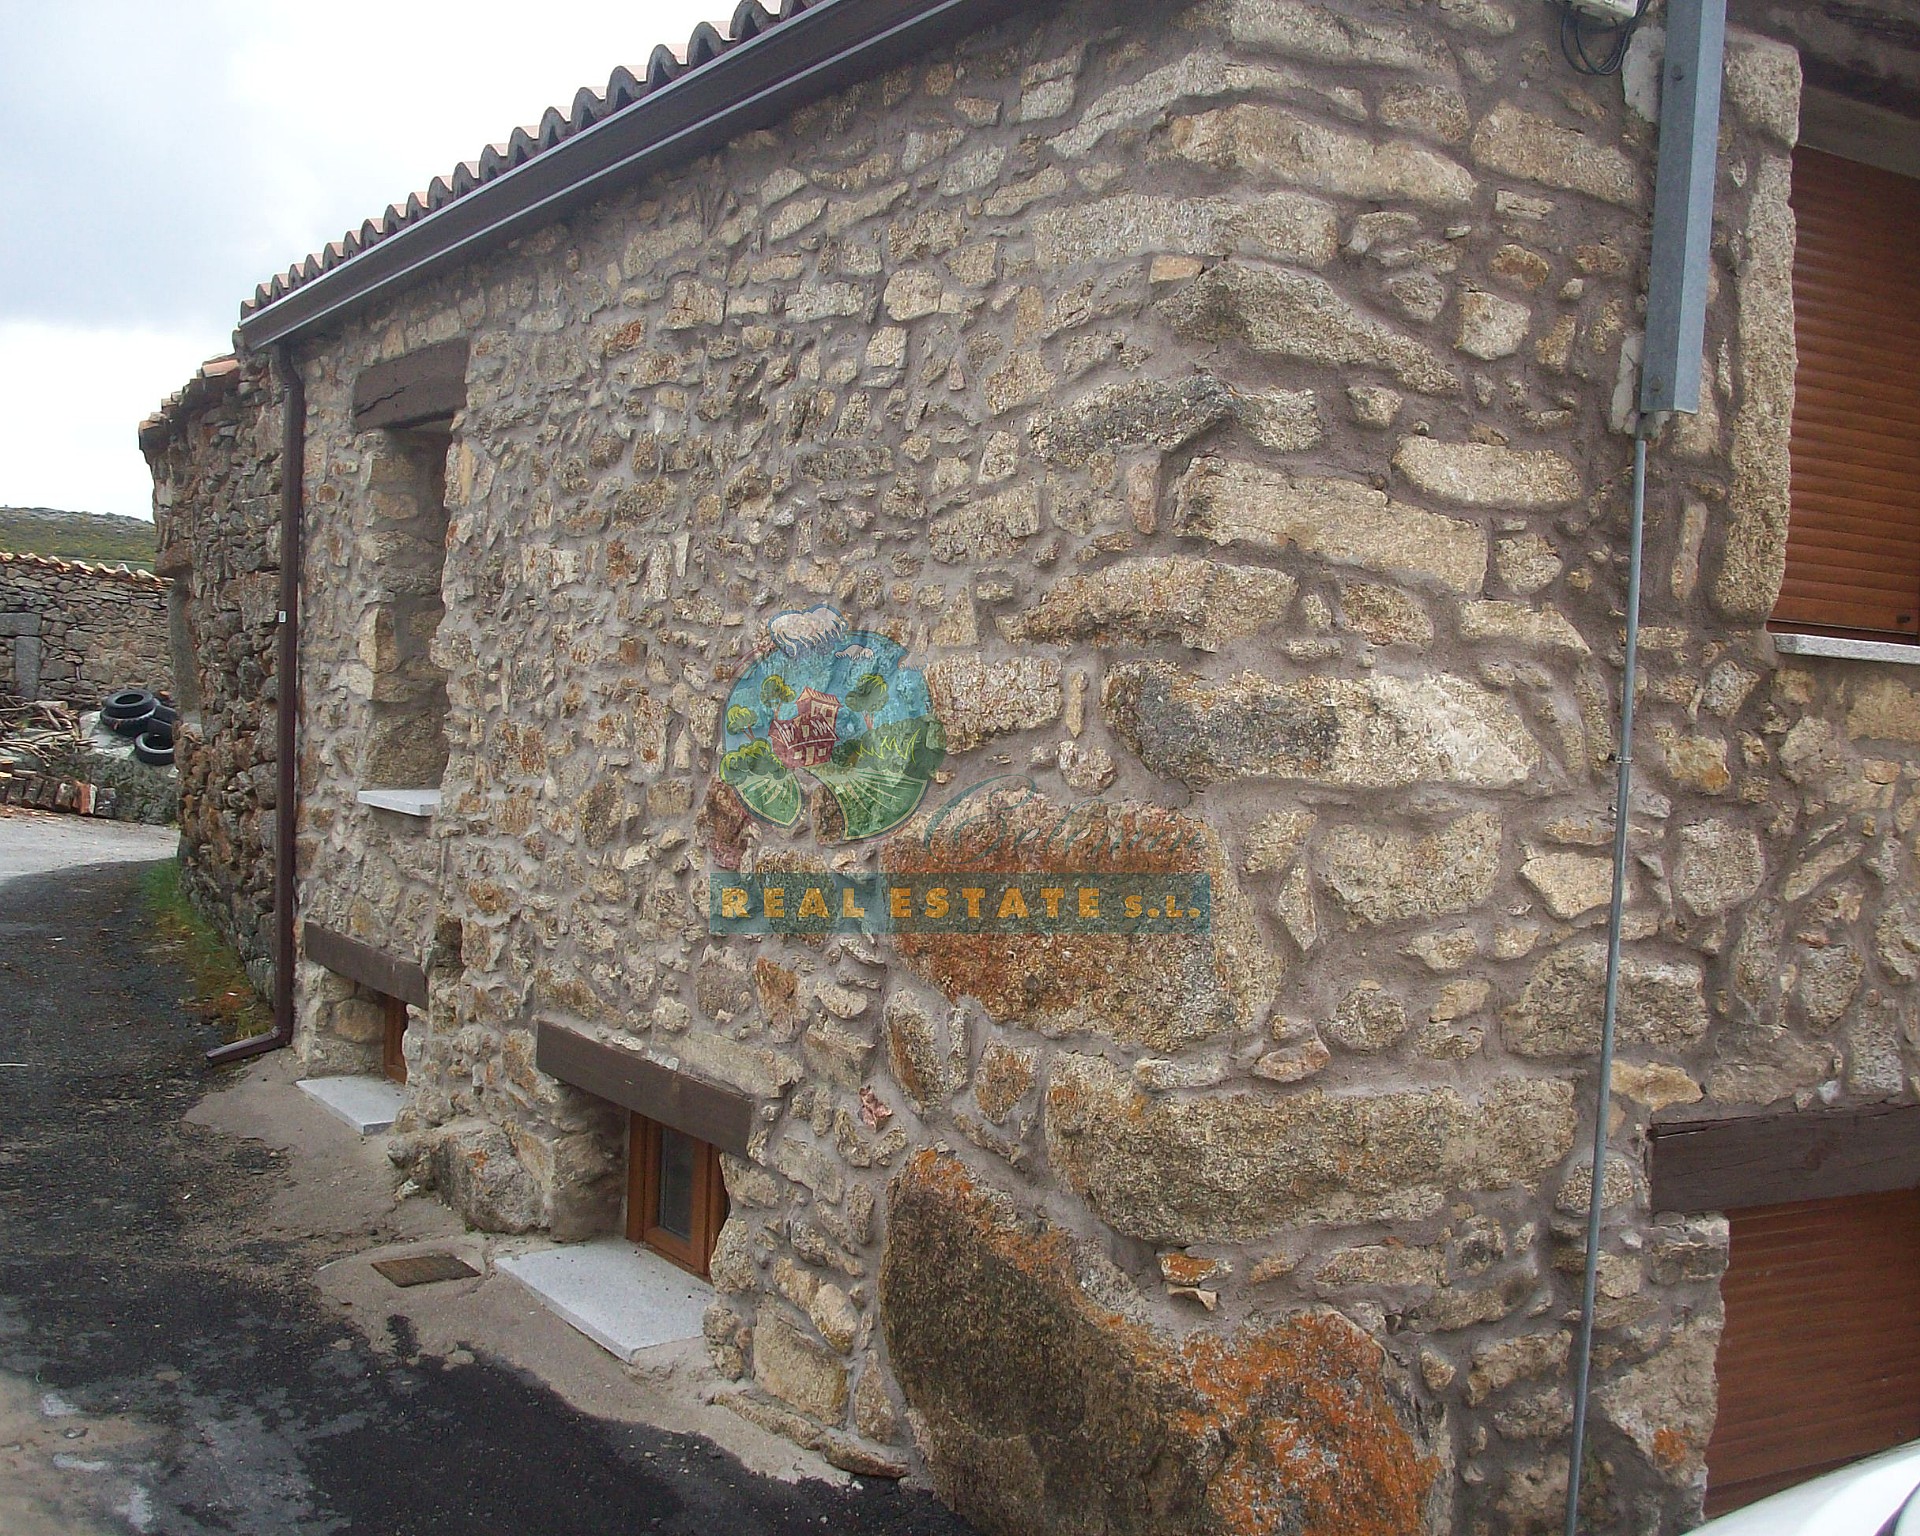 Restored rural house in Sierra de Gredos